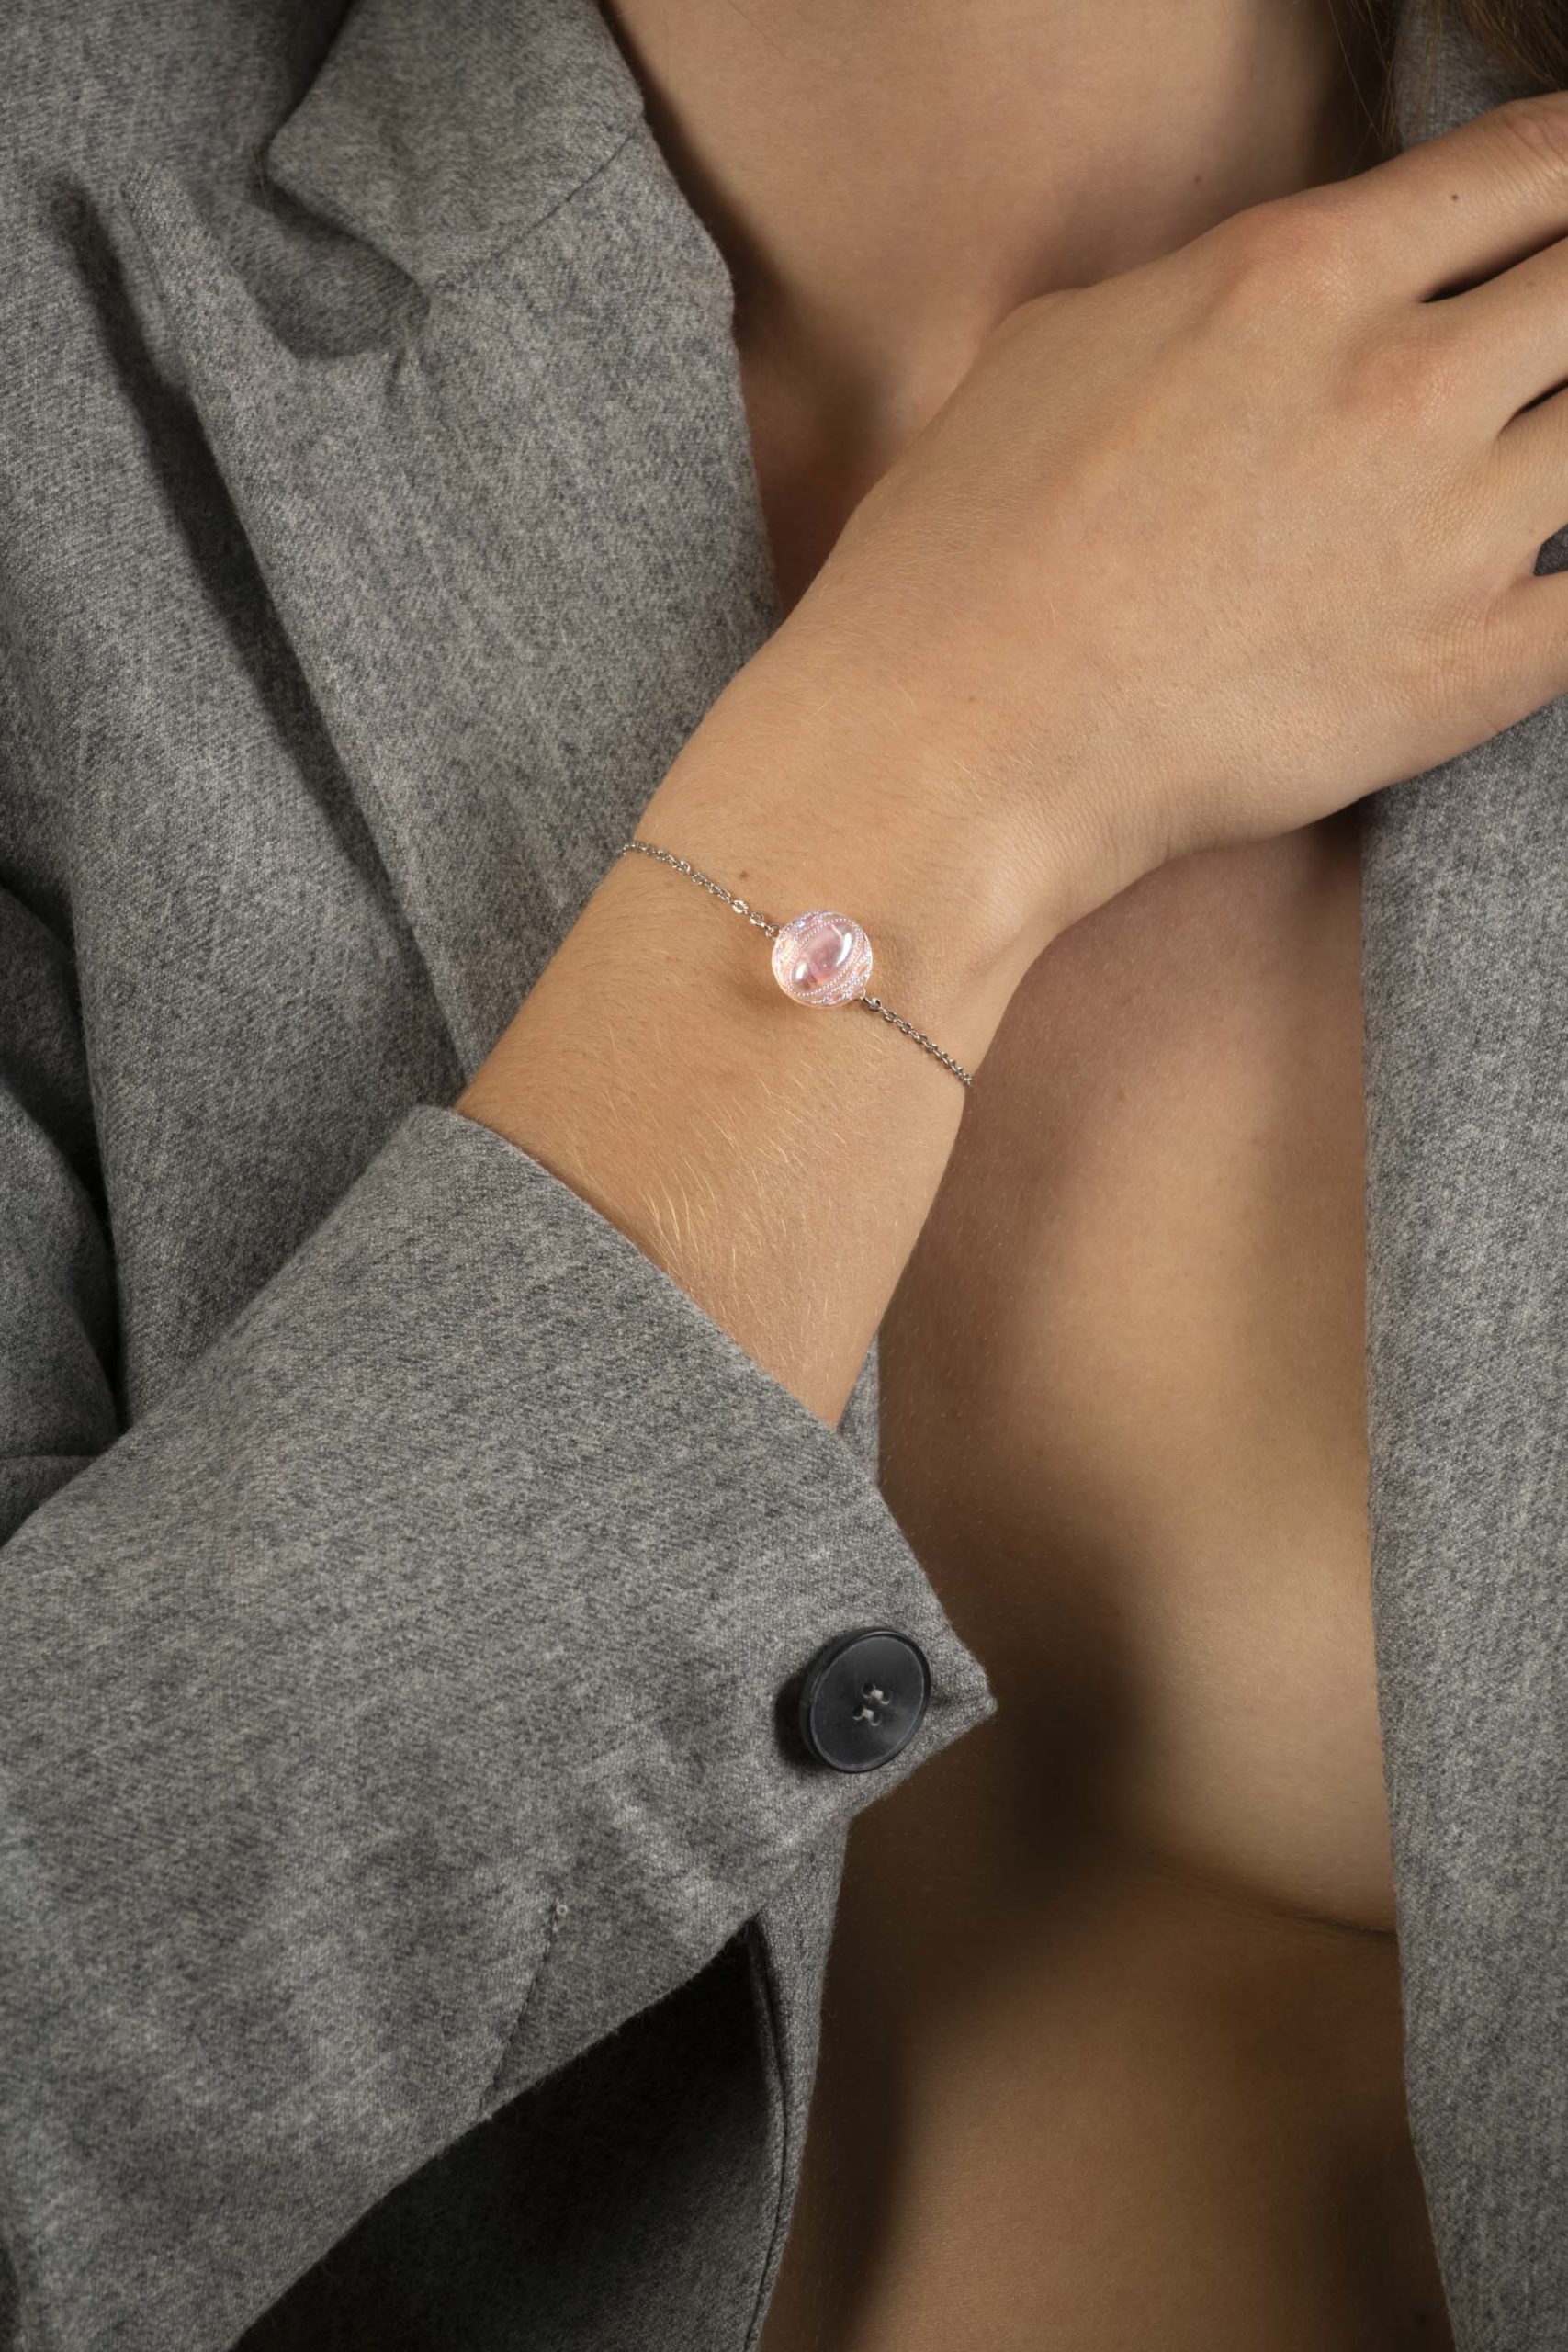 Assuna – Look Bracelet chaîne simple Candice rose irisé transparent bouton ancien 1940 esprit vintage